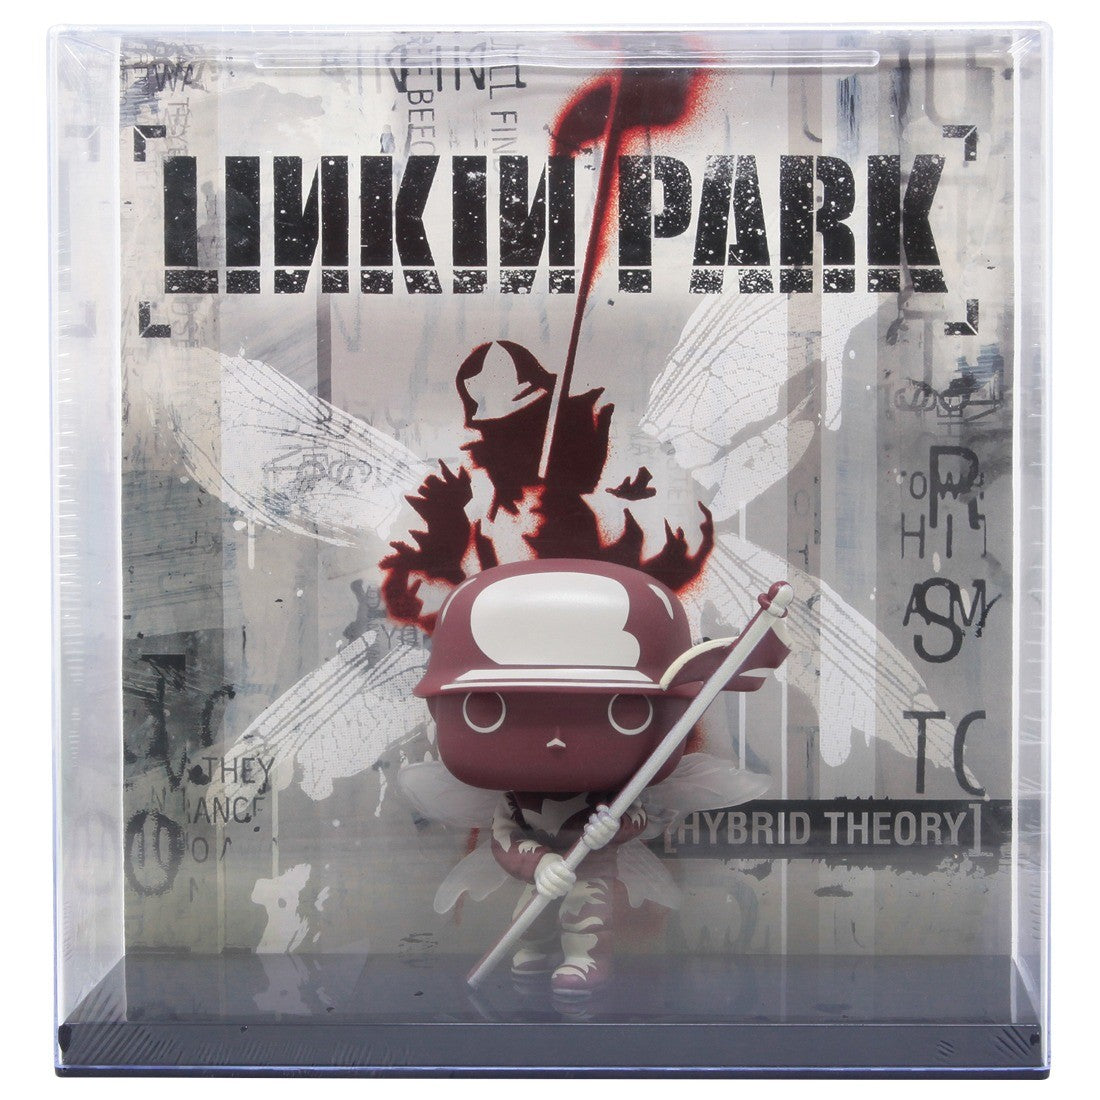 Funko Album - Linkin Park Hybrid Theory